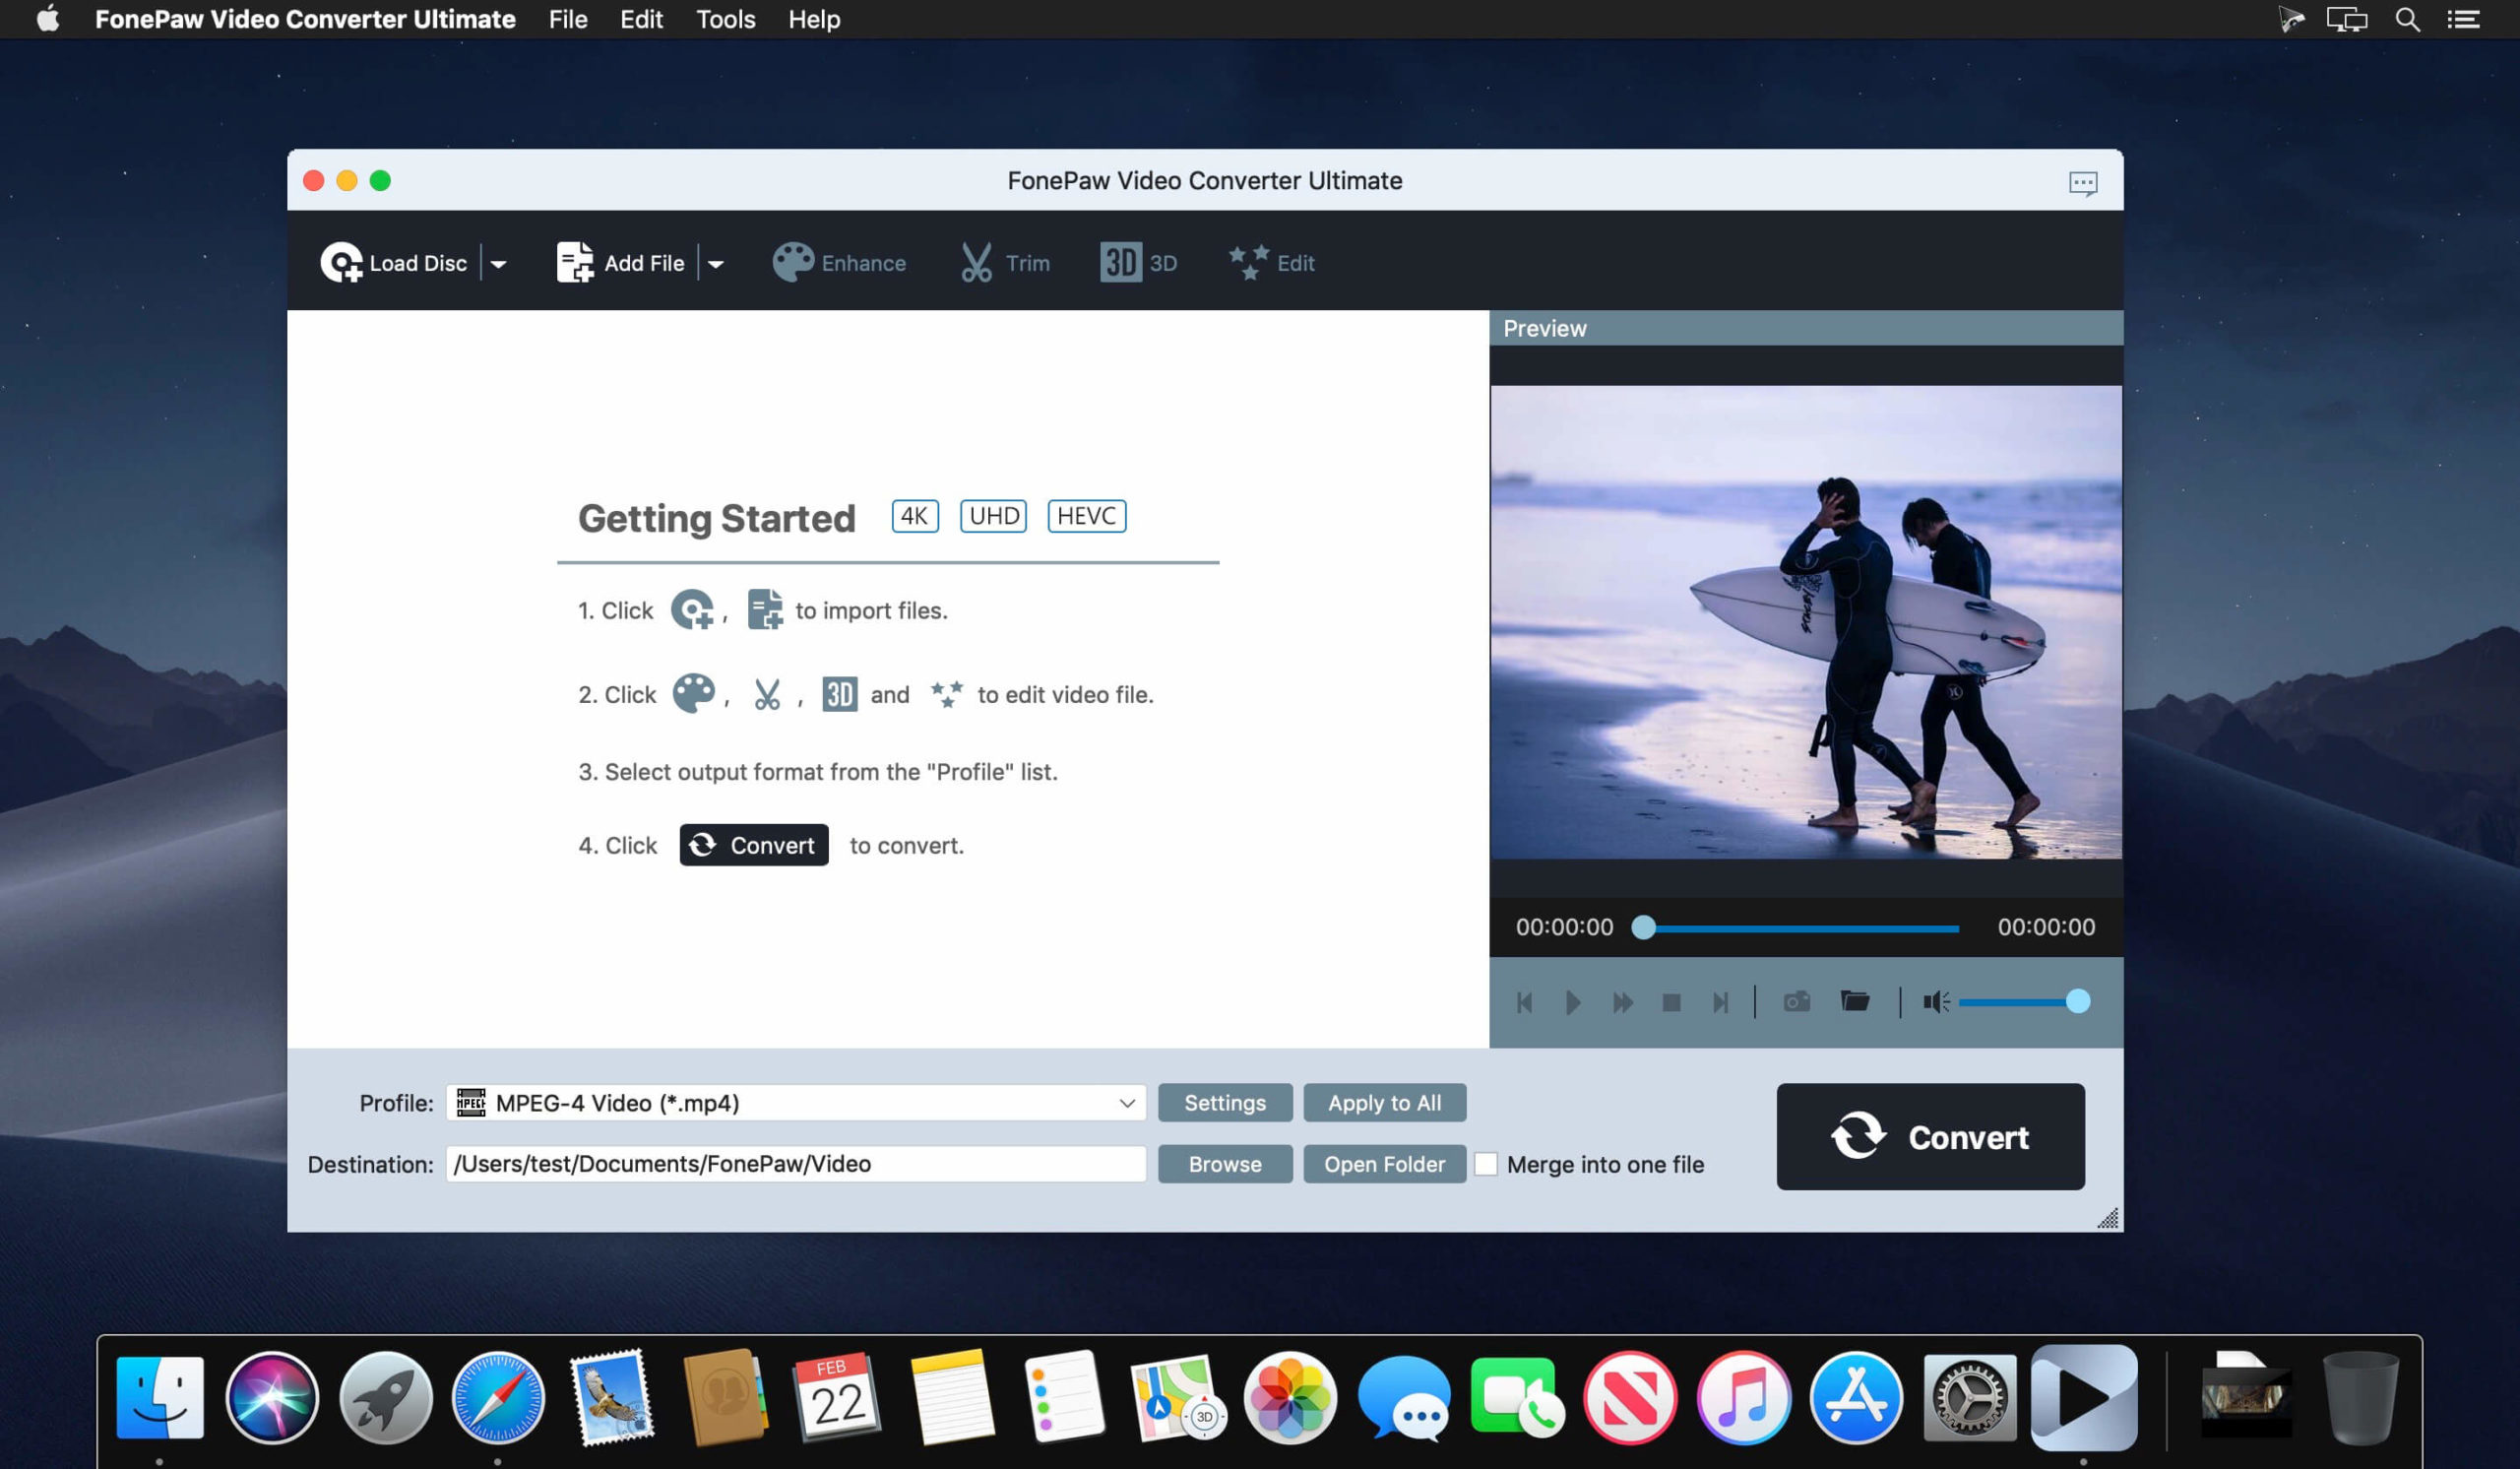 FonePaw Video Converter Ultimate 8.2.0 free